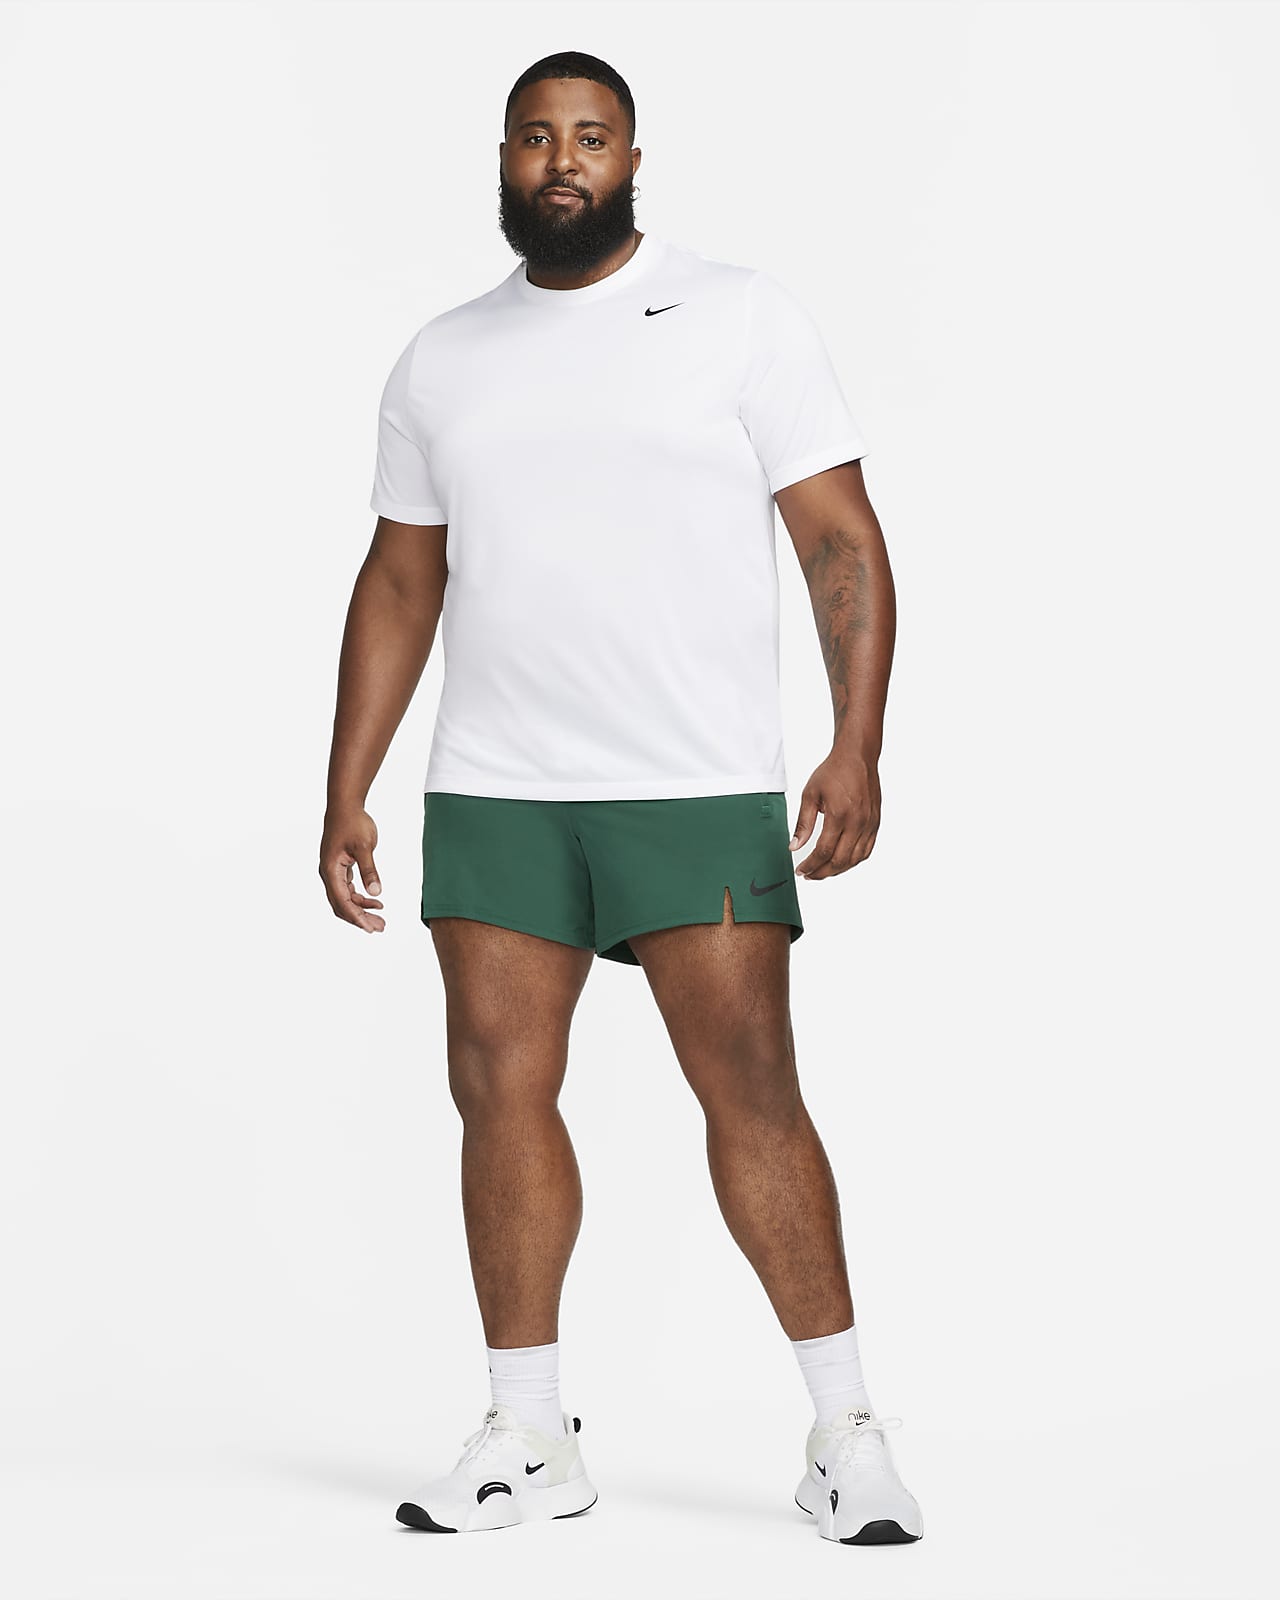 nike men's small shorts size chart